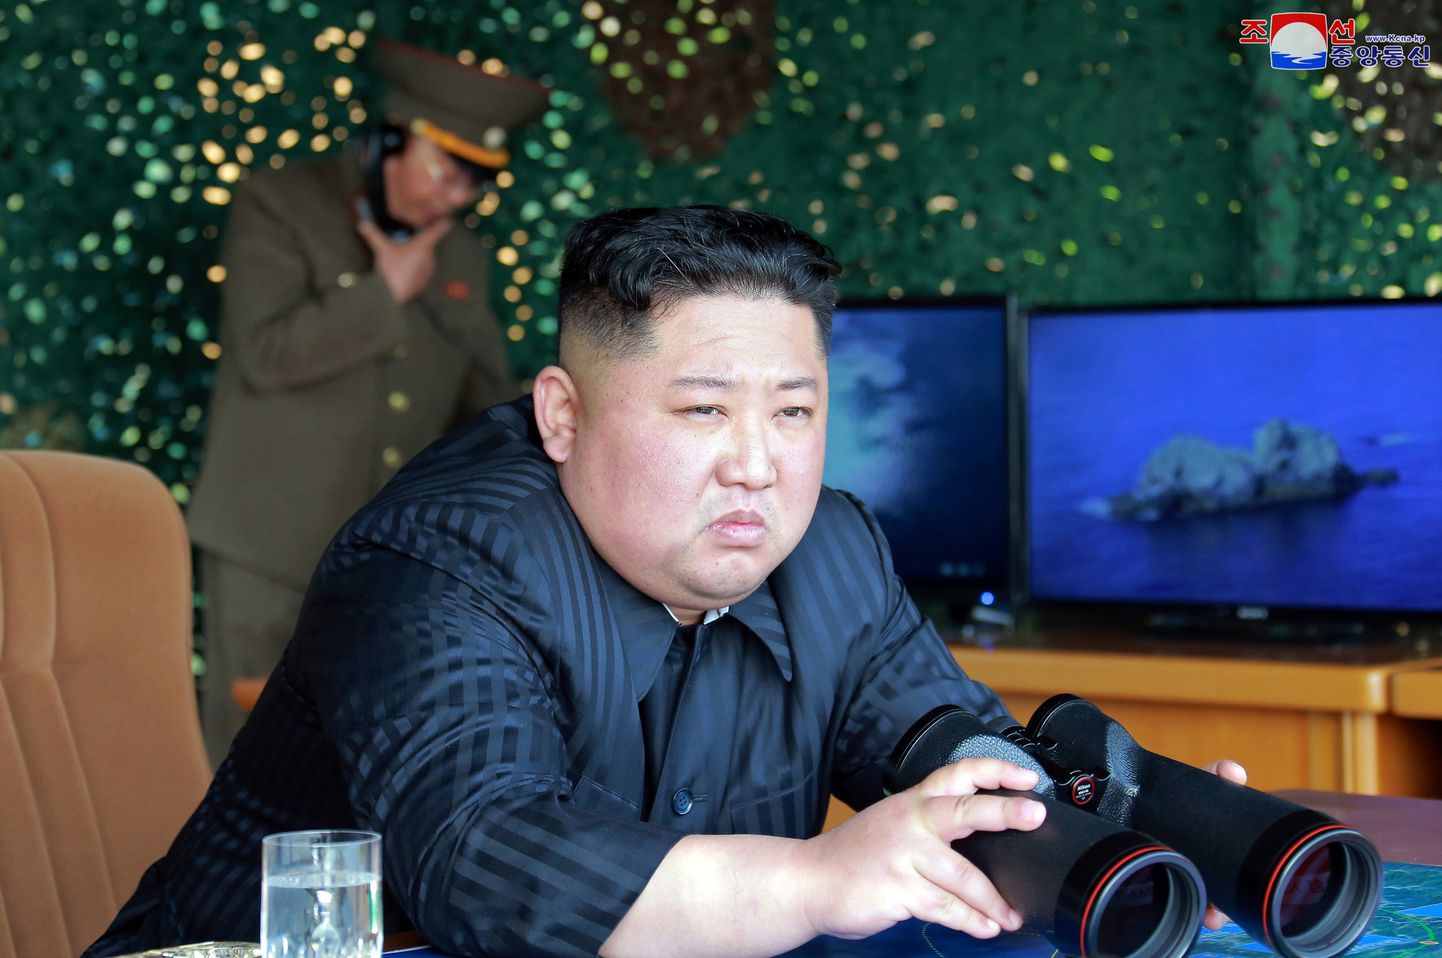 Põhja-Korea diktaator Kim Jong-un jälgimas laupäevast raketikatsetust.